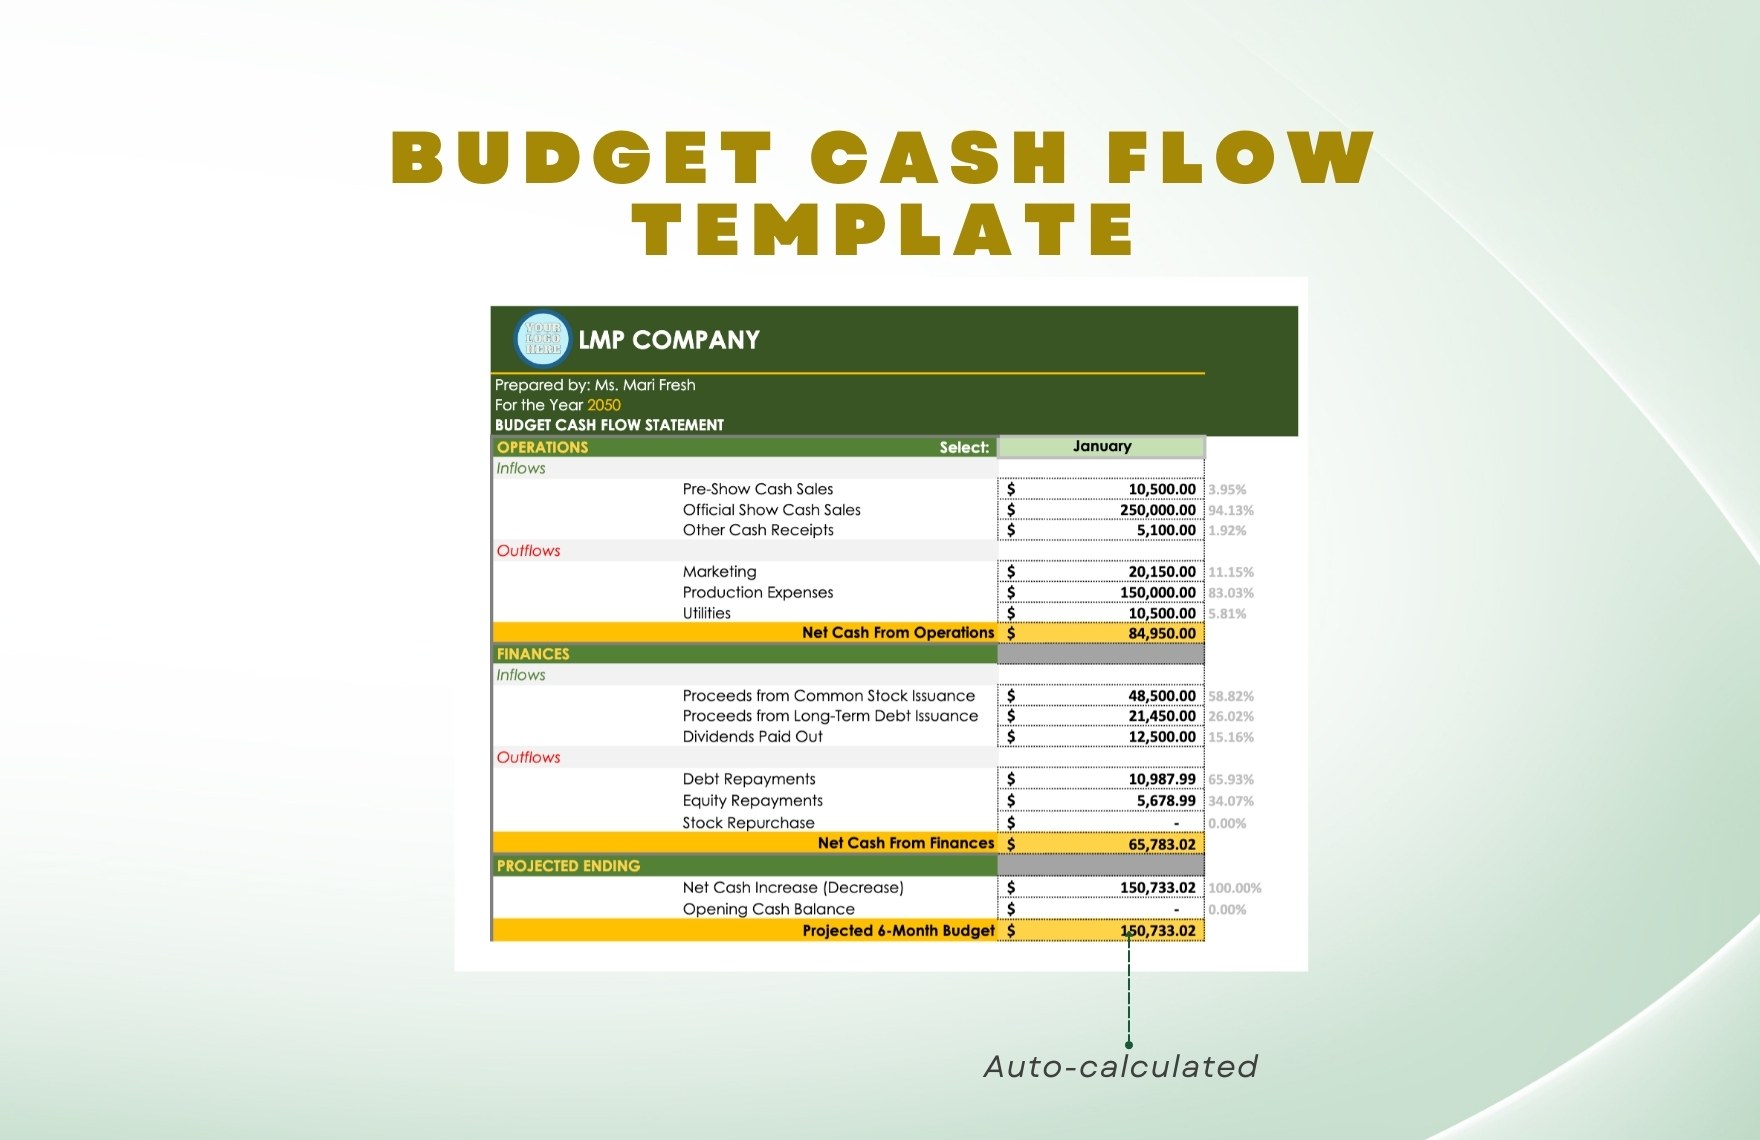 Budget Cash Flow Template